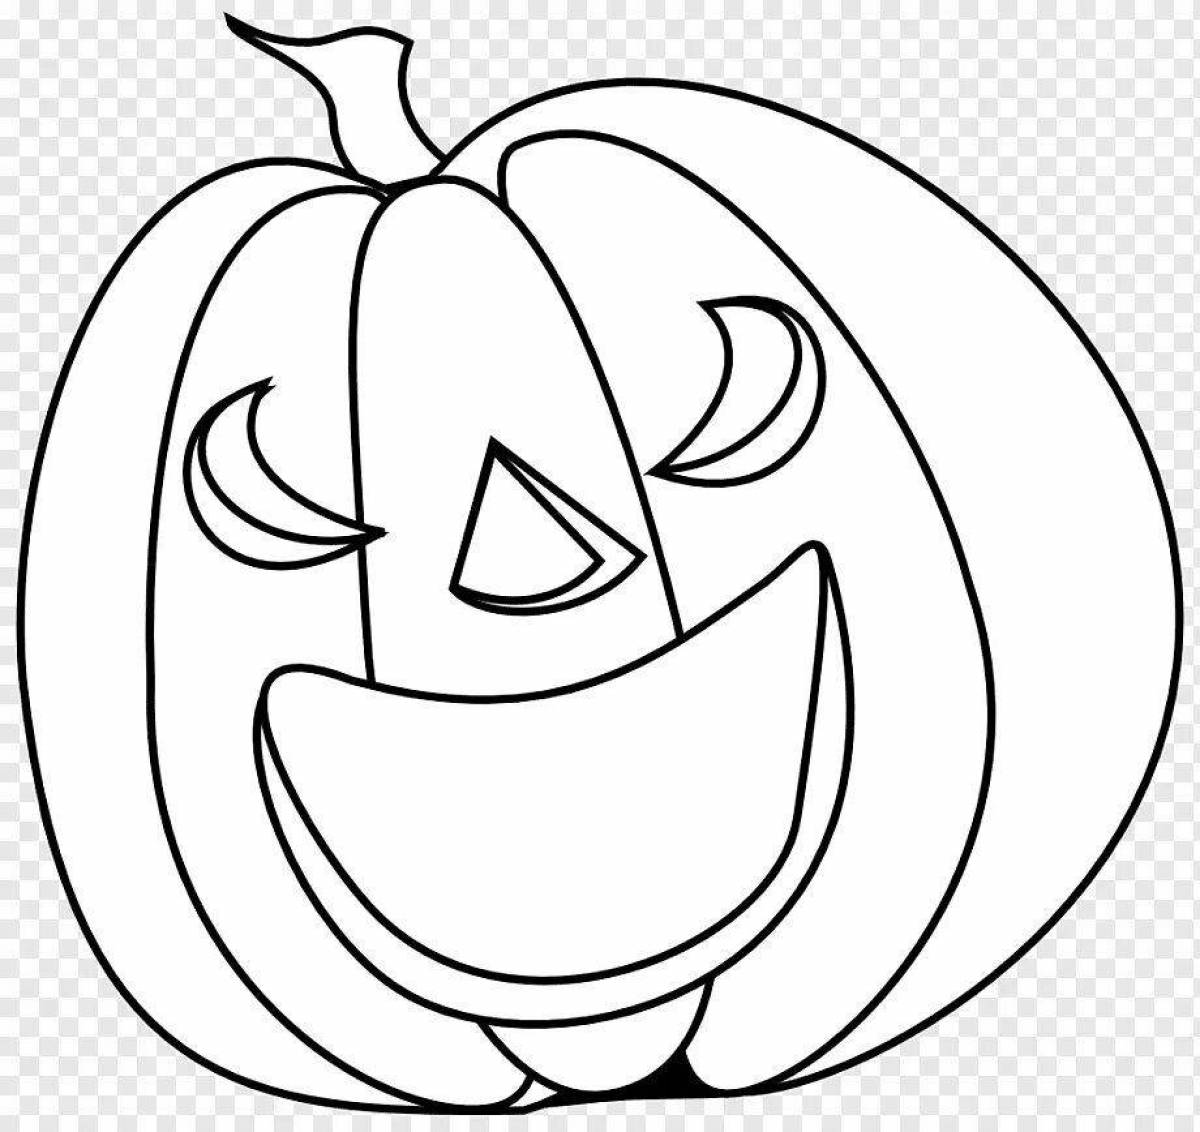 Fascinating halloween pumpkin coloring page